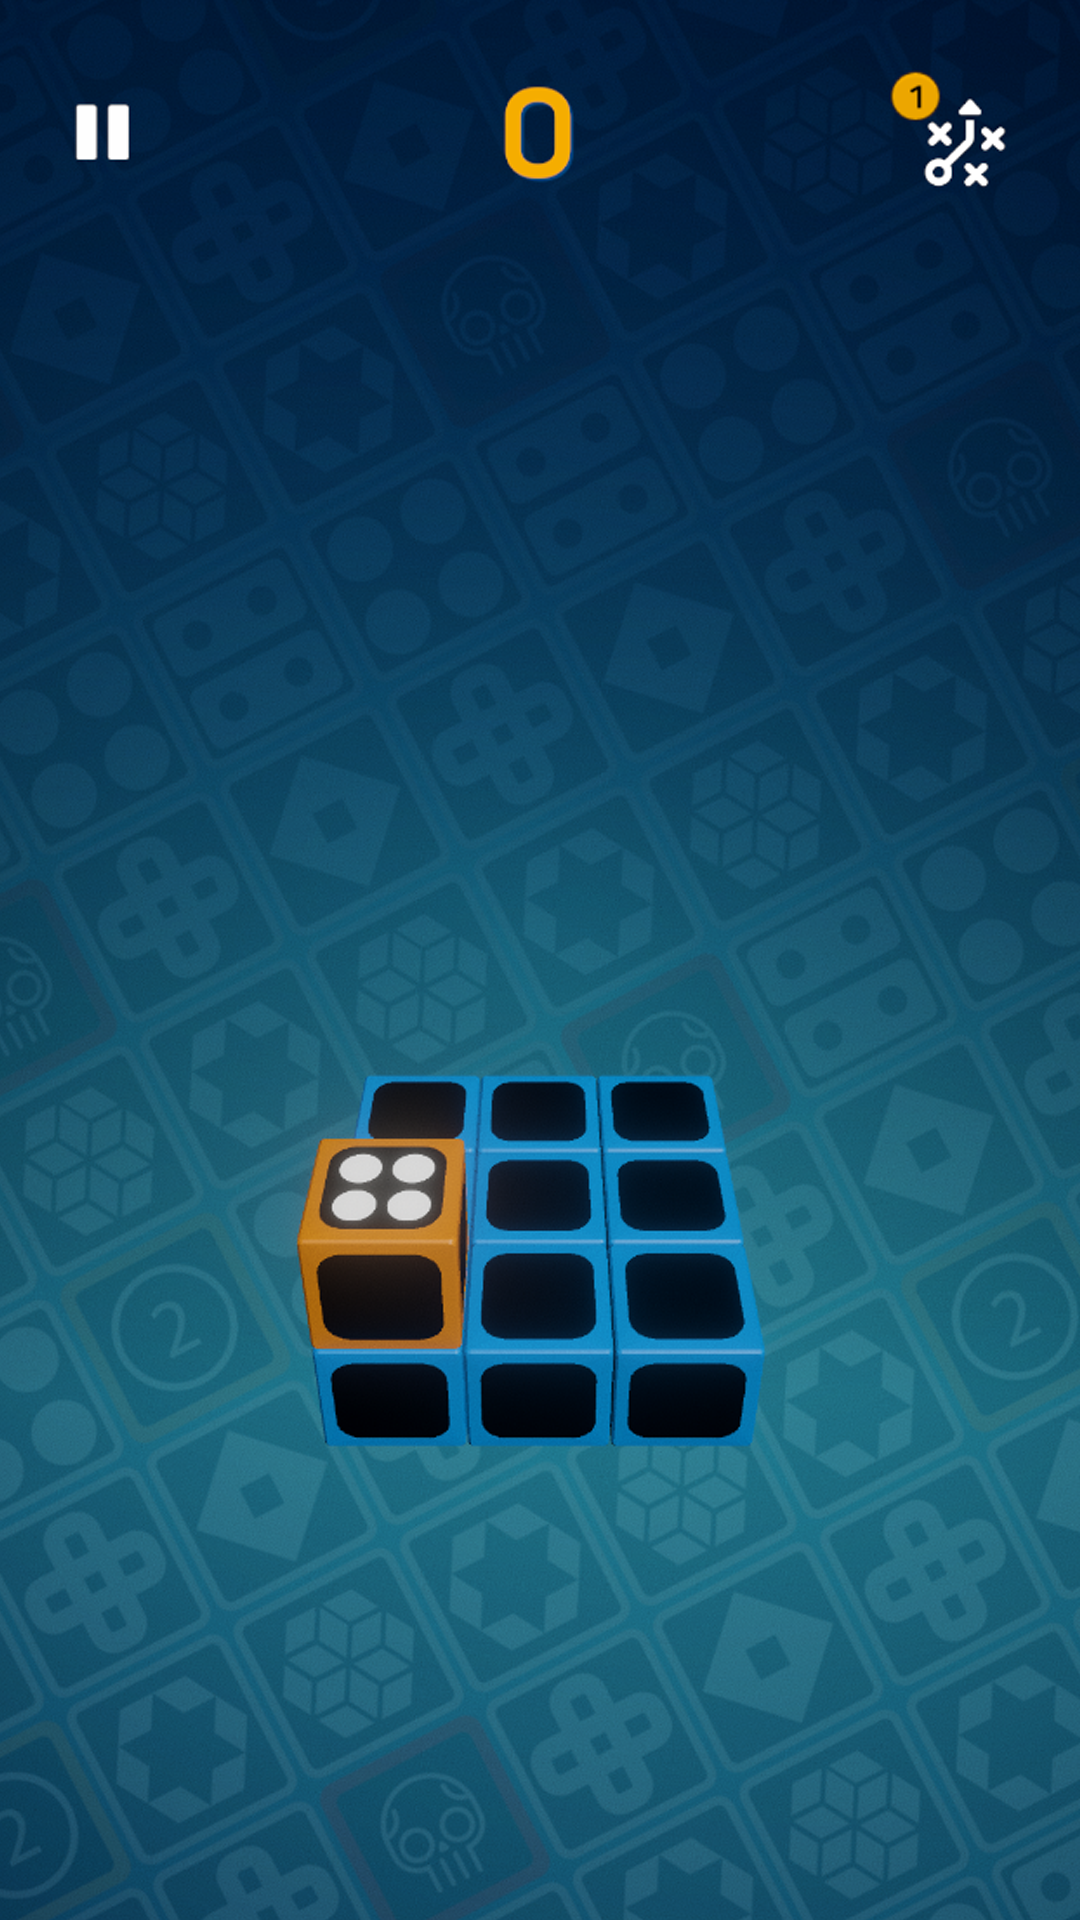 Cubeirus - A Cube Game screenshot game